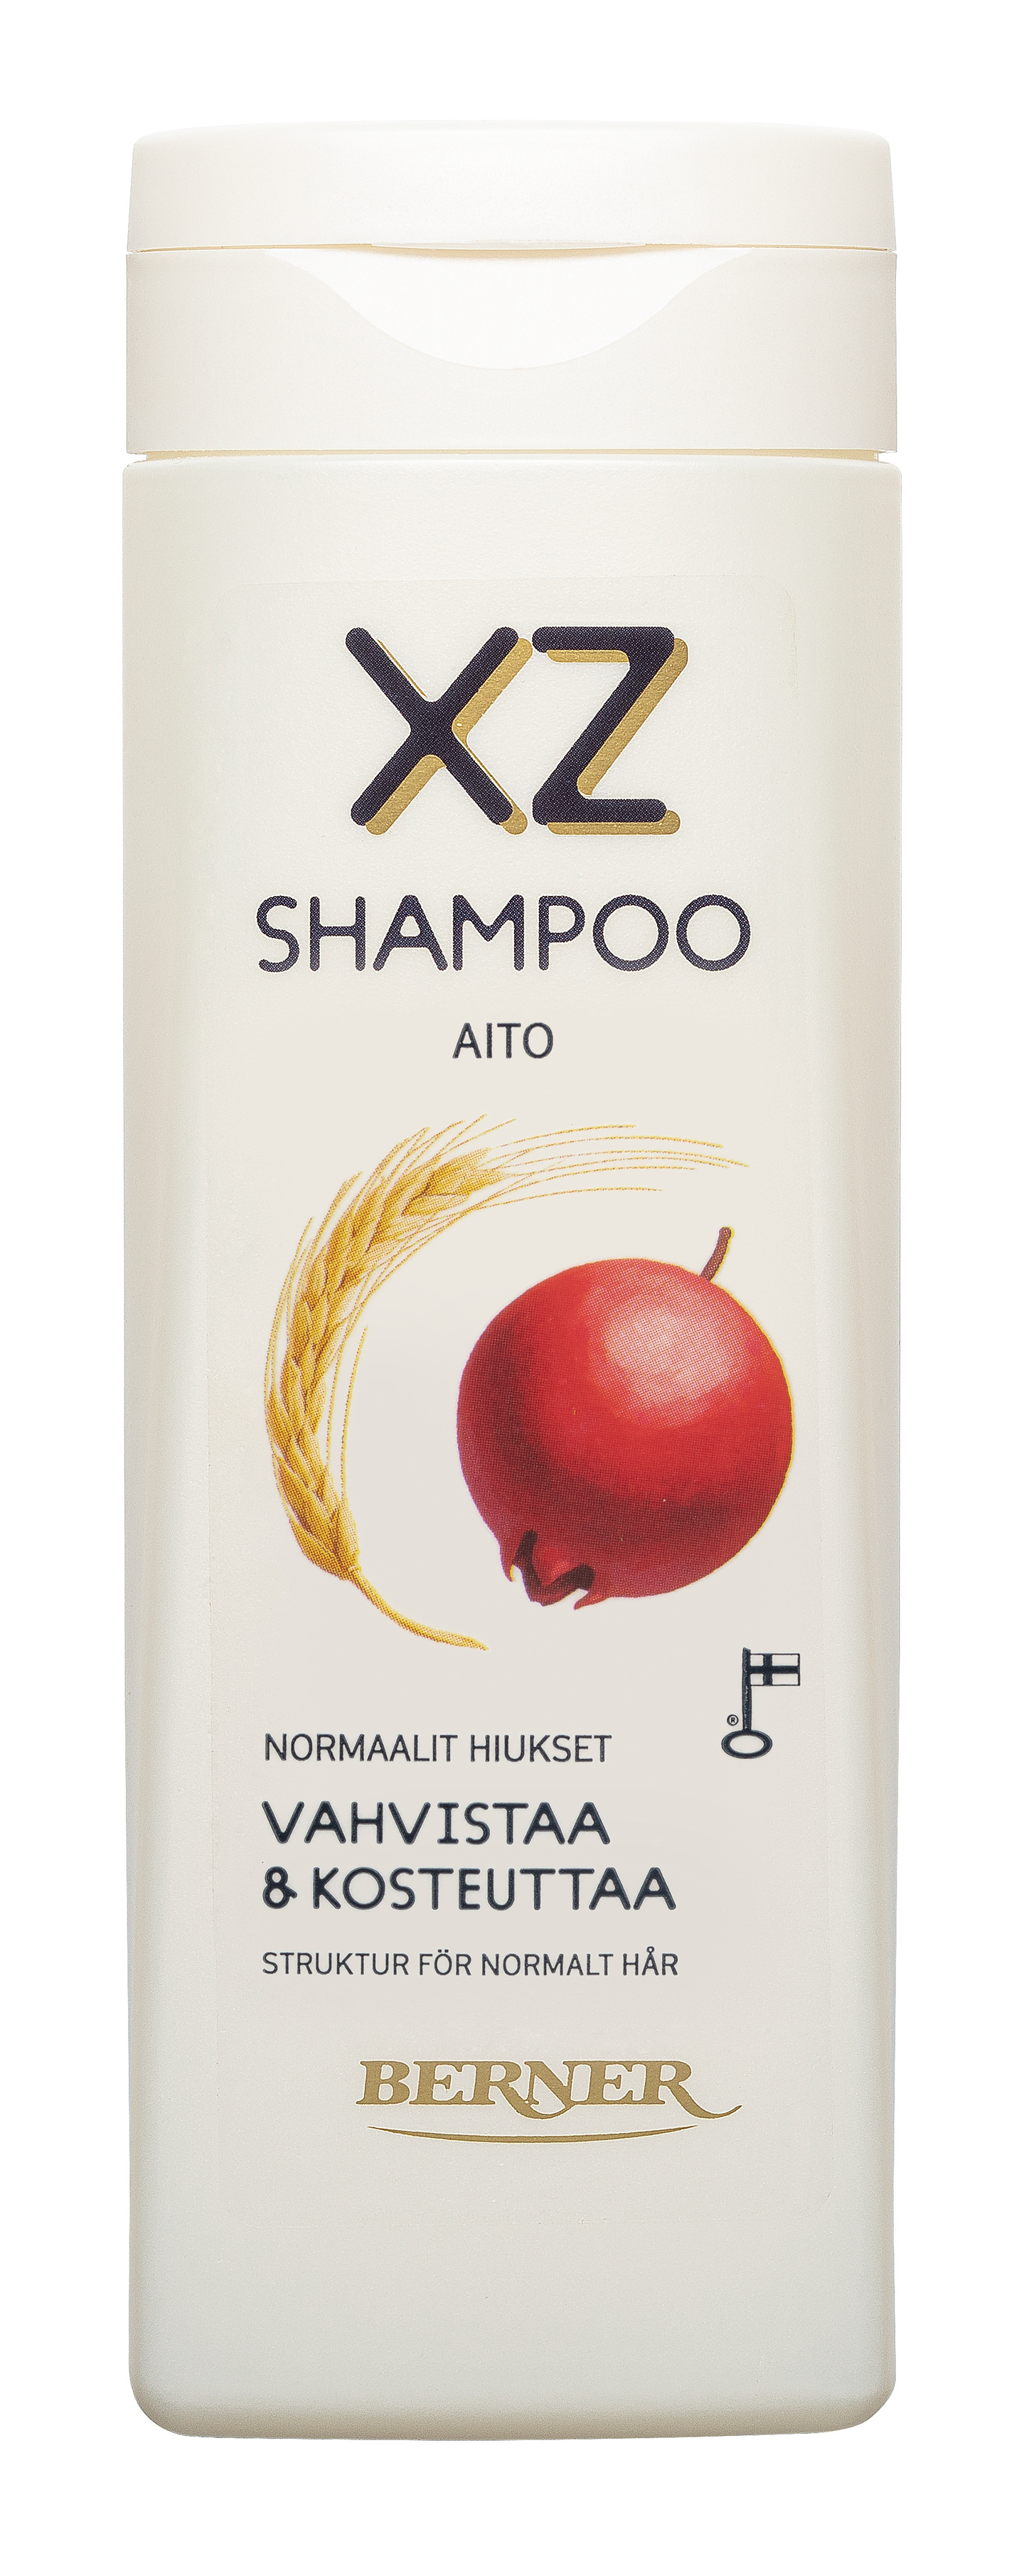 XZ shampoo 250ml Aito normaalit hiukset